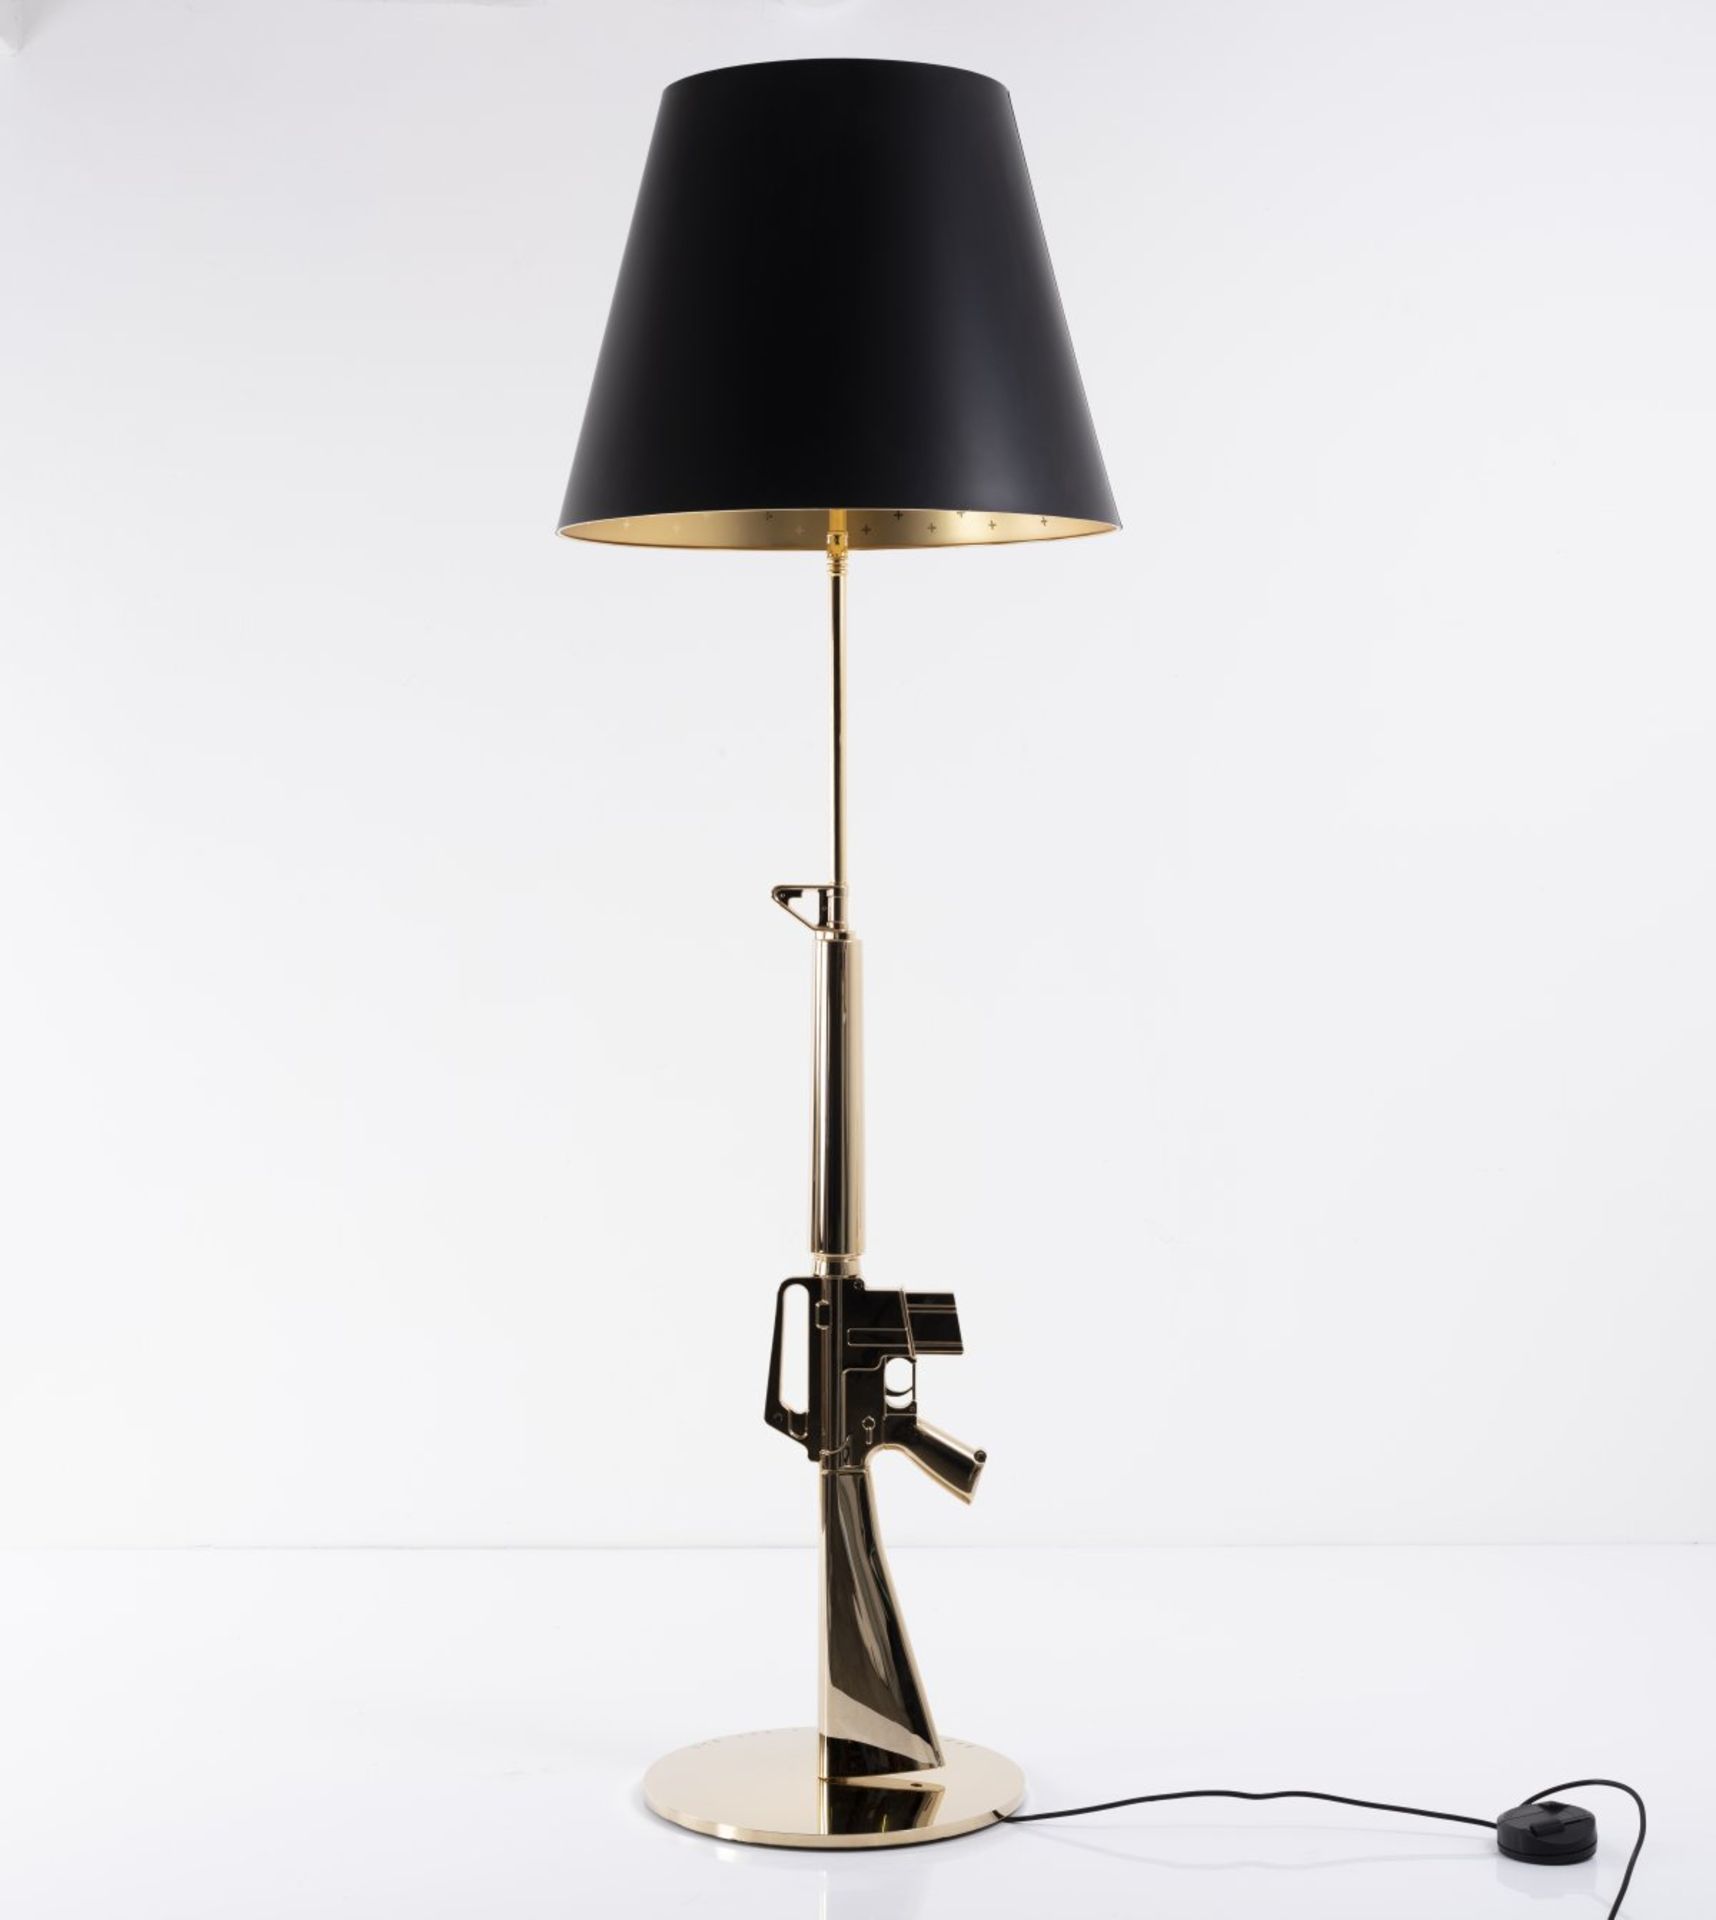 Philippe Starck, 'Lounge Gun' floor lamp, 2005